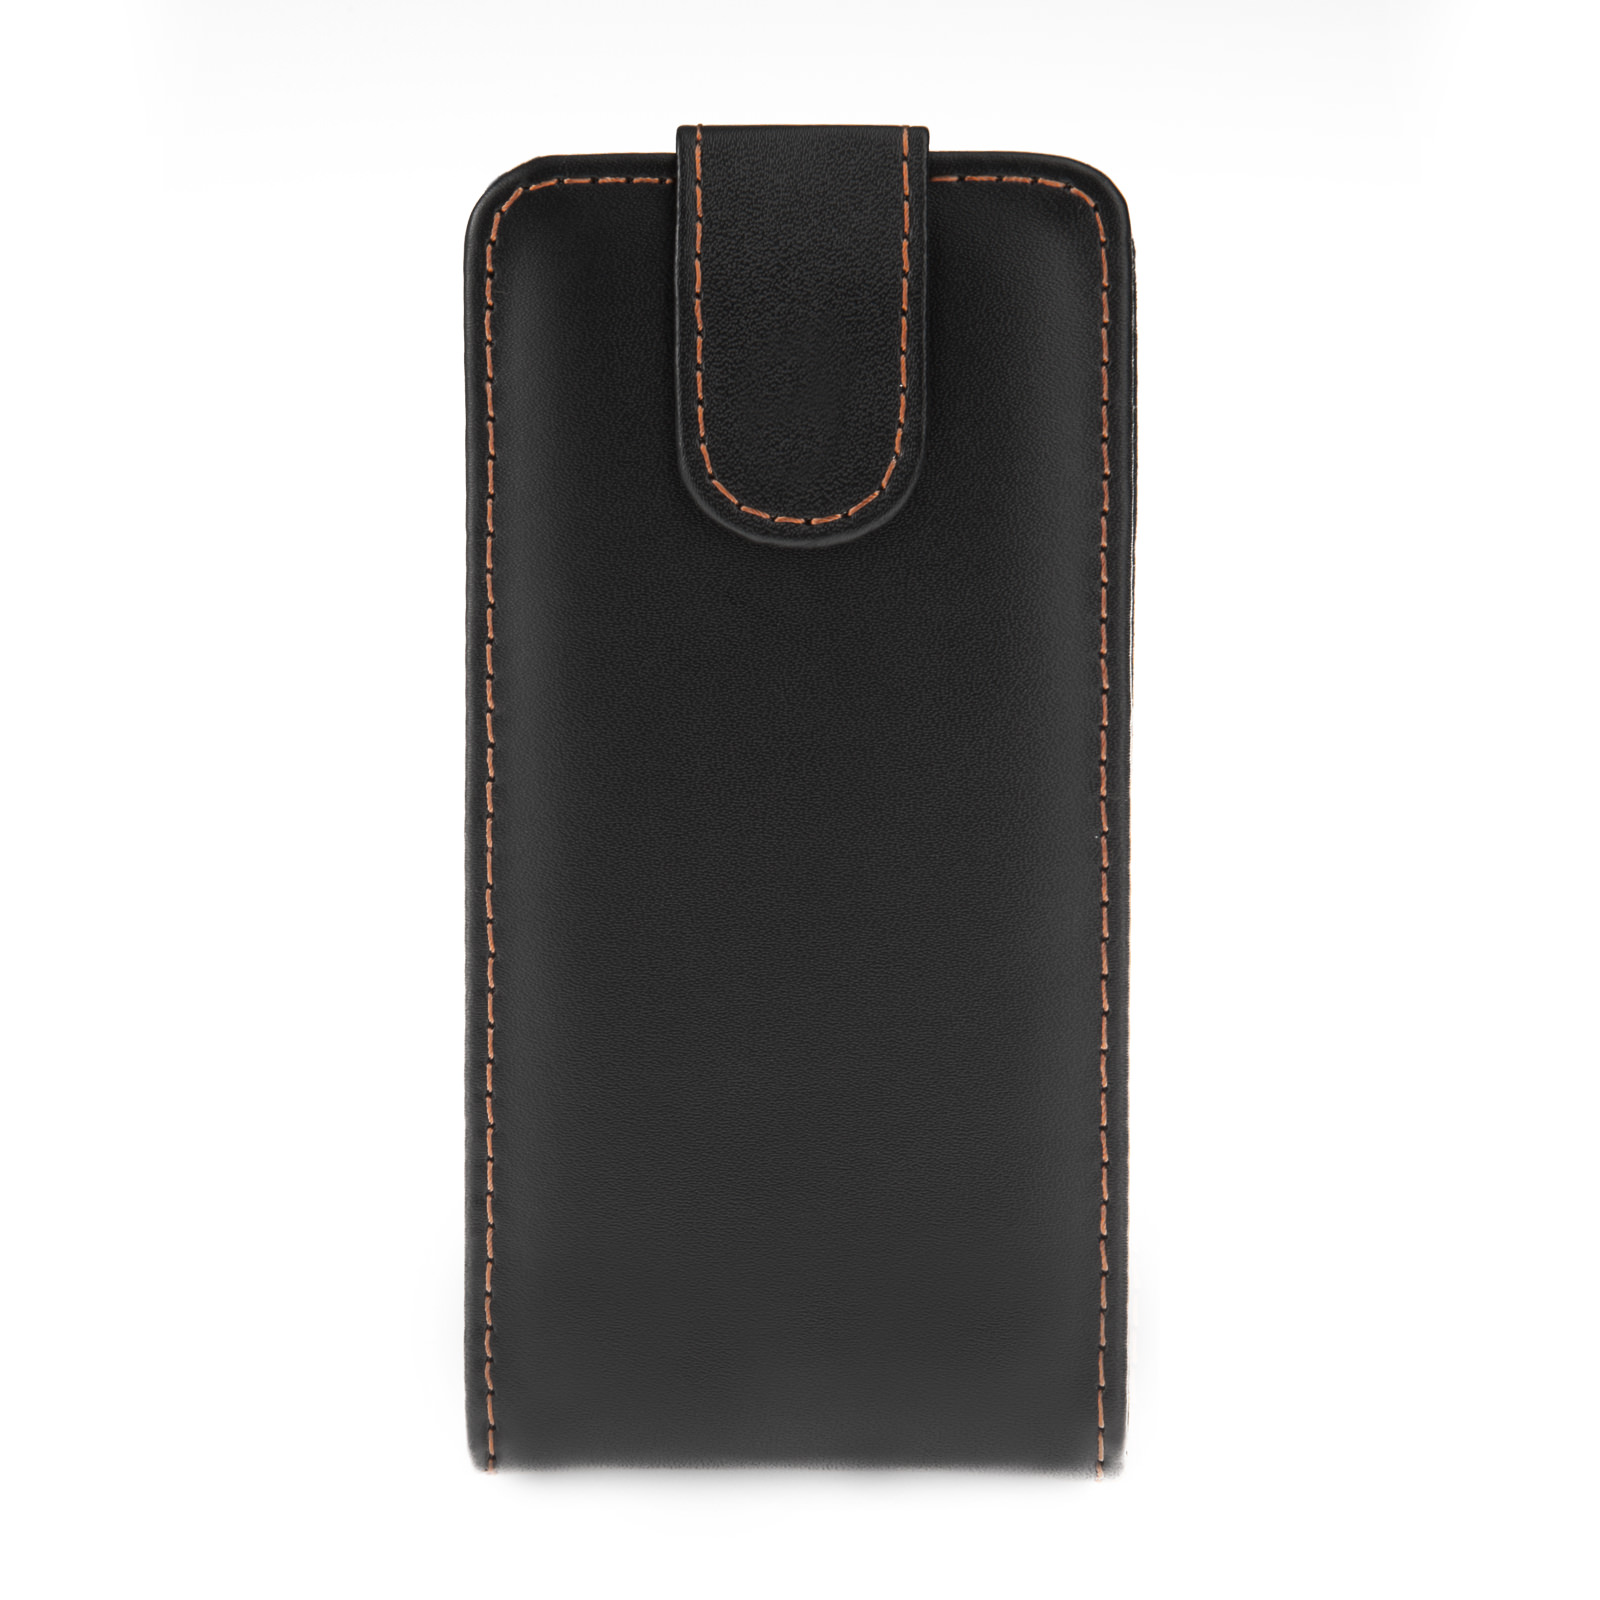 YouSave Samsung Galaxy Alpha Leather-Effect Flip Case - Black